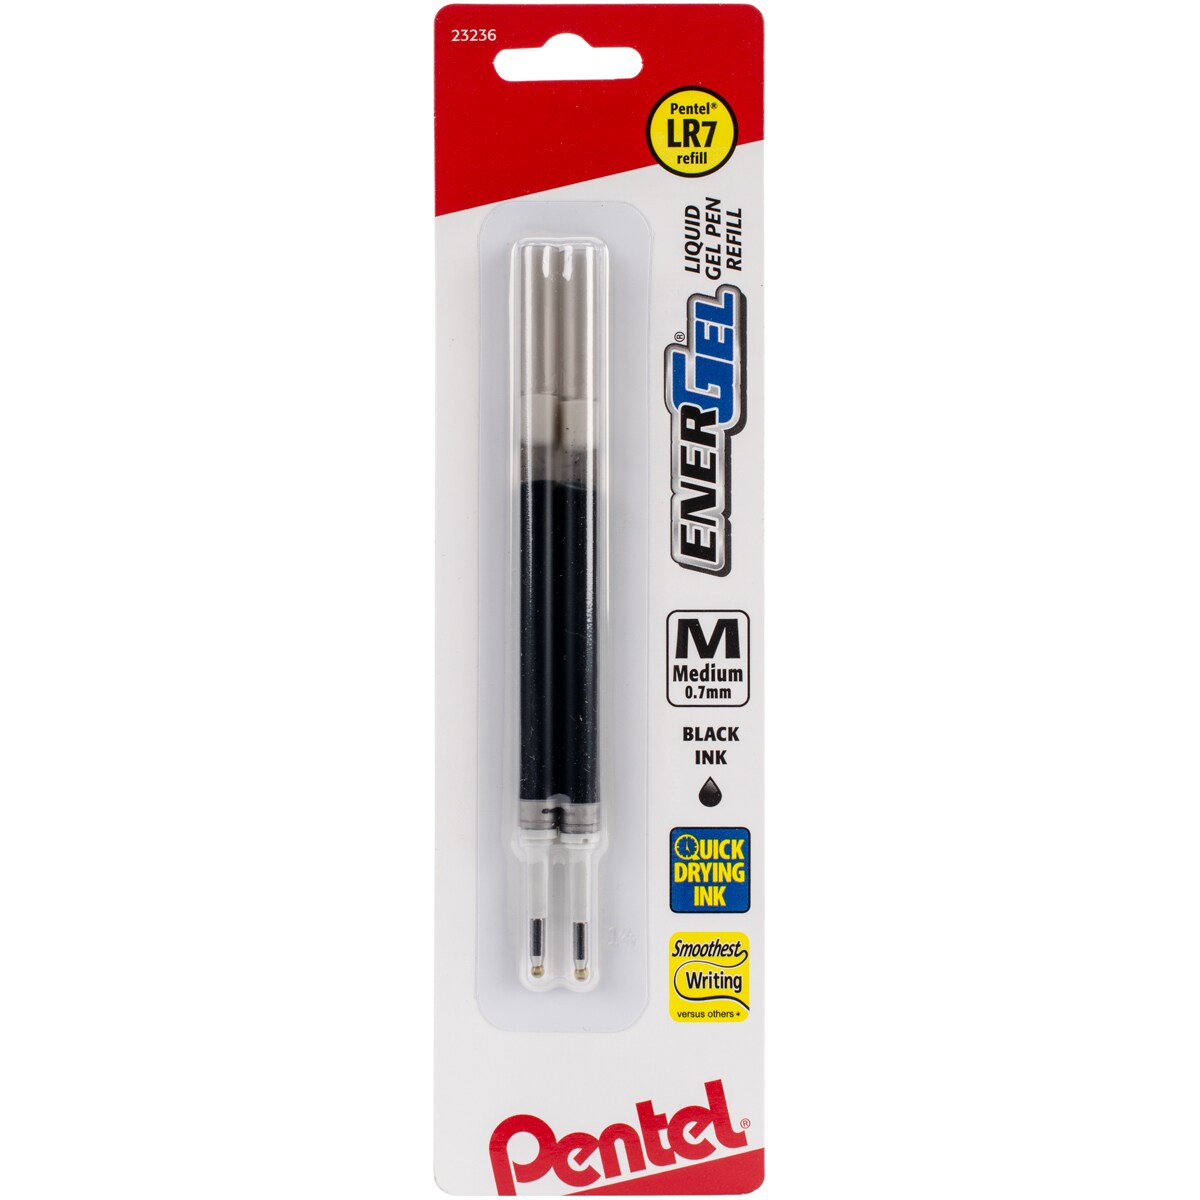 Pentel EnerGel Pen Refill Ink For .7mm Metal Tip Pen 2/Pkg-Black